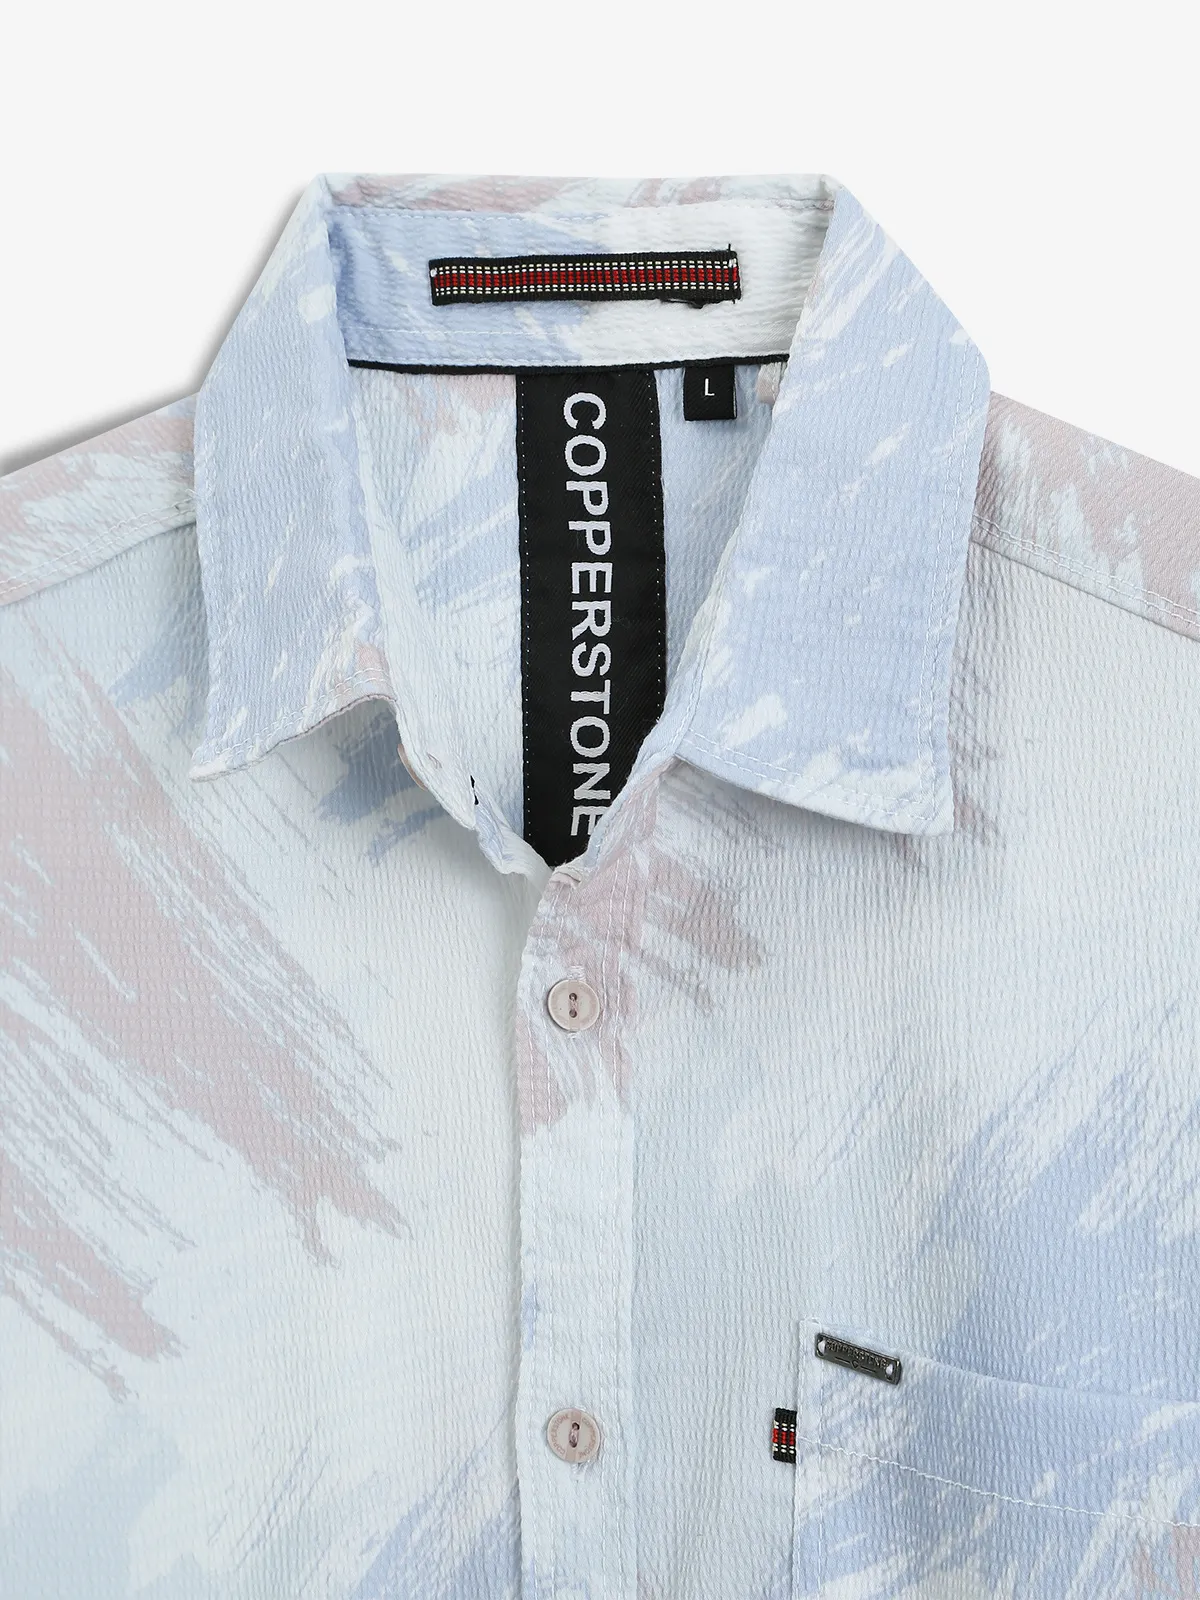 COPPER STONE light blue printed casual shirt